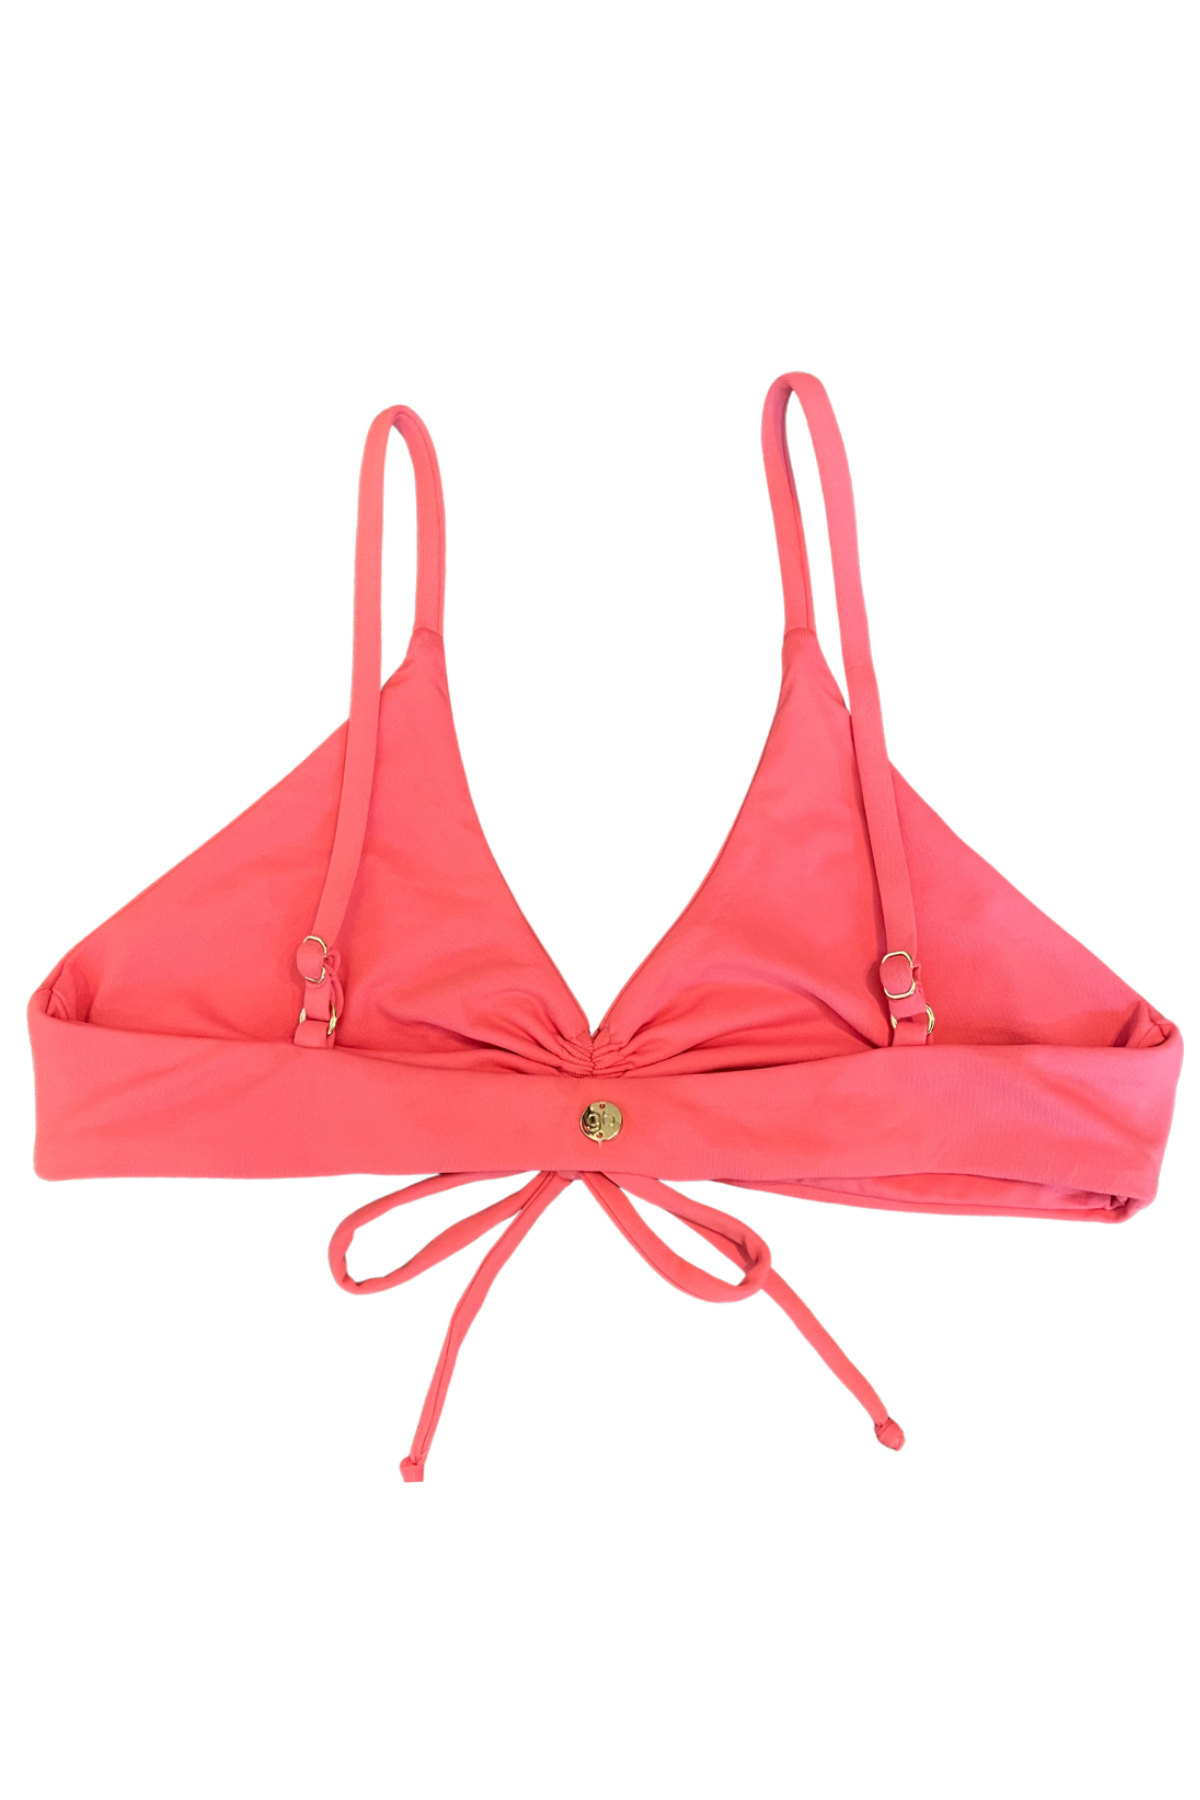 coral adjustable bikini top with drawstrings